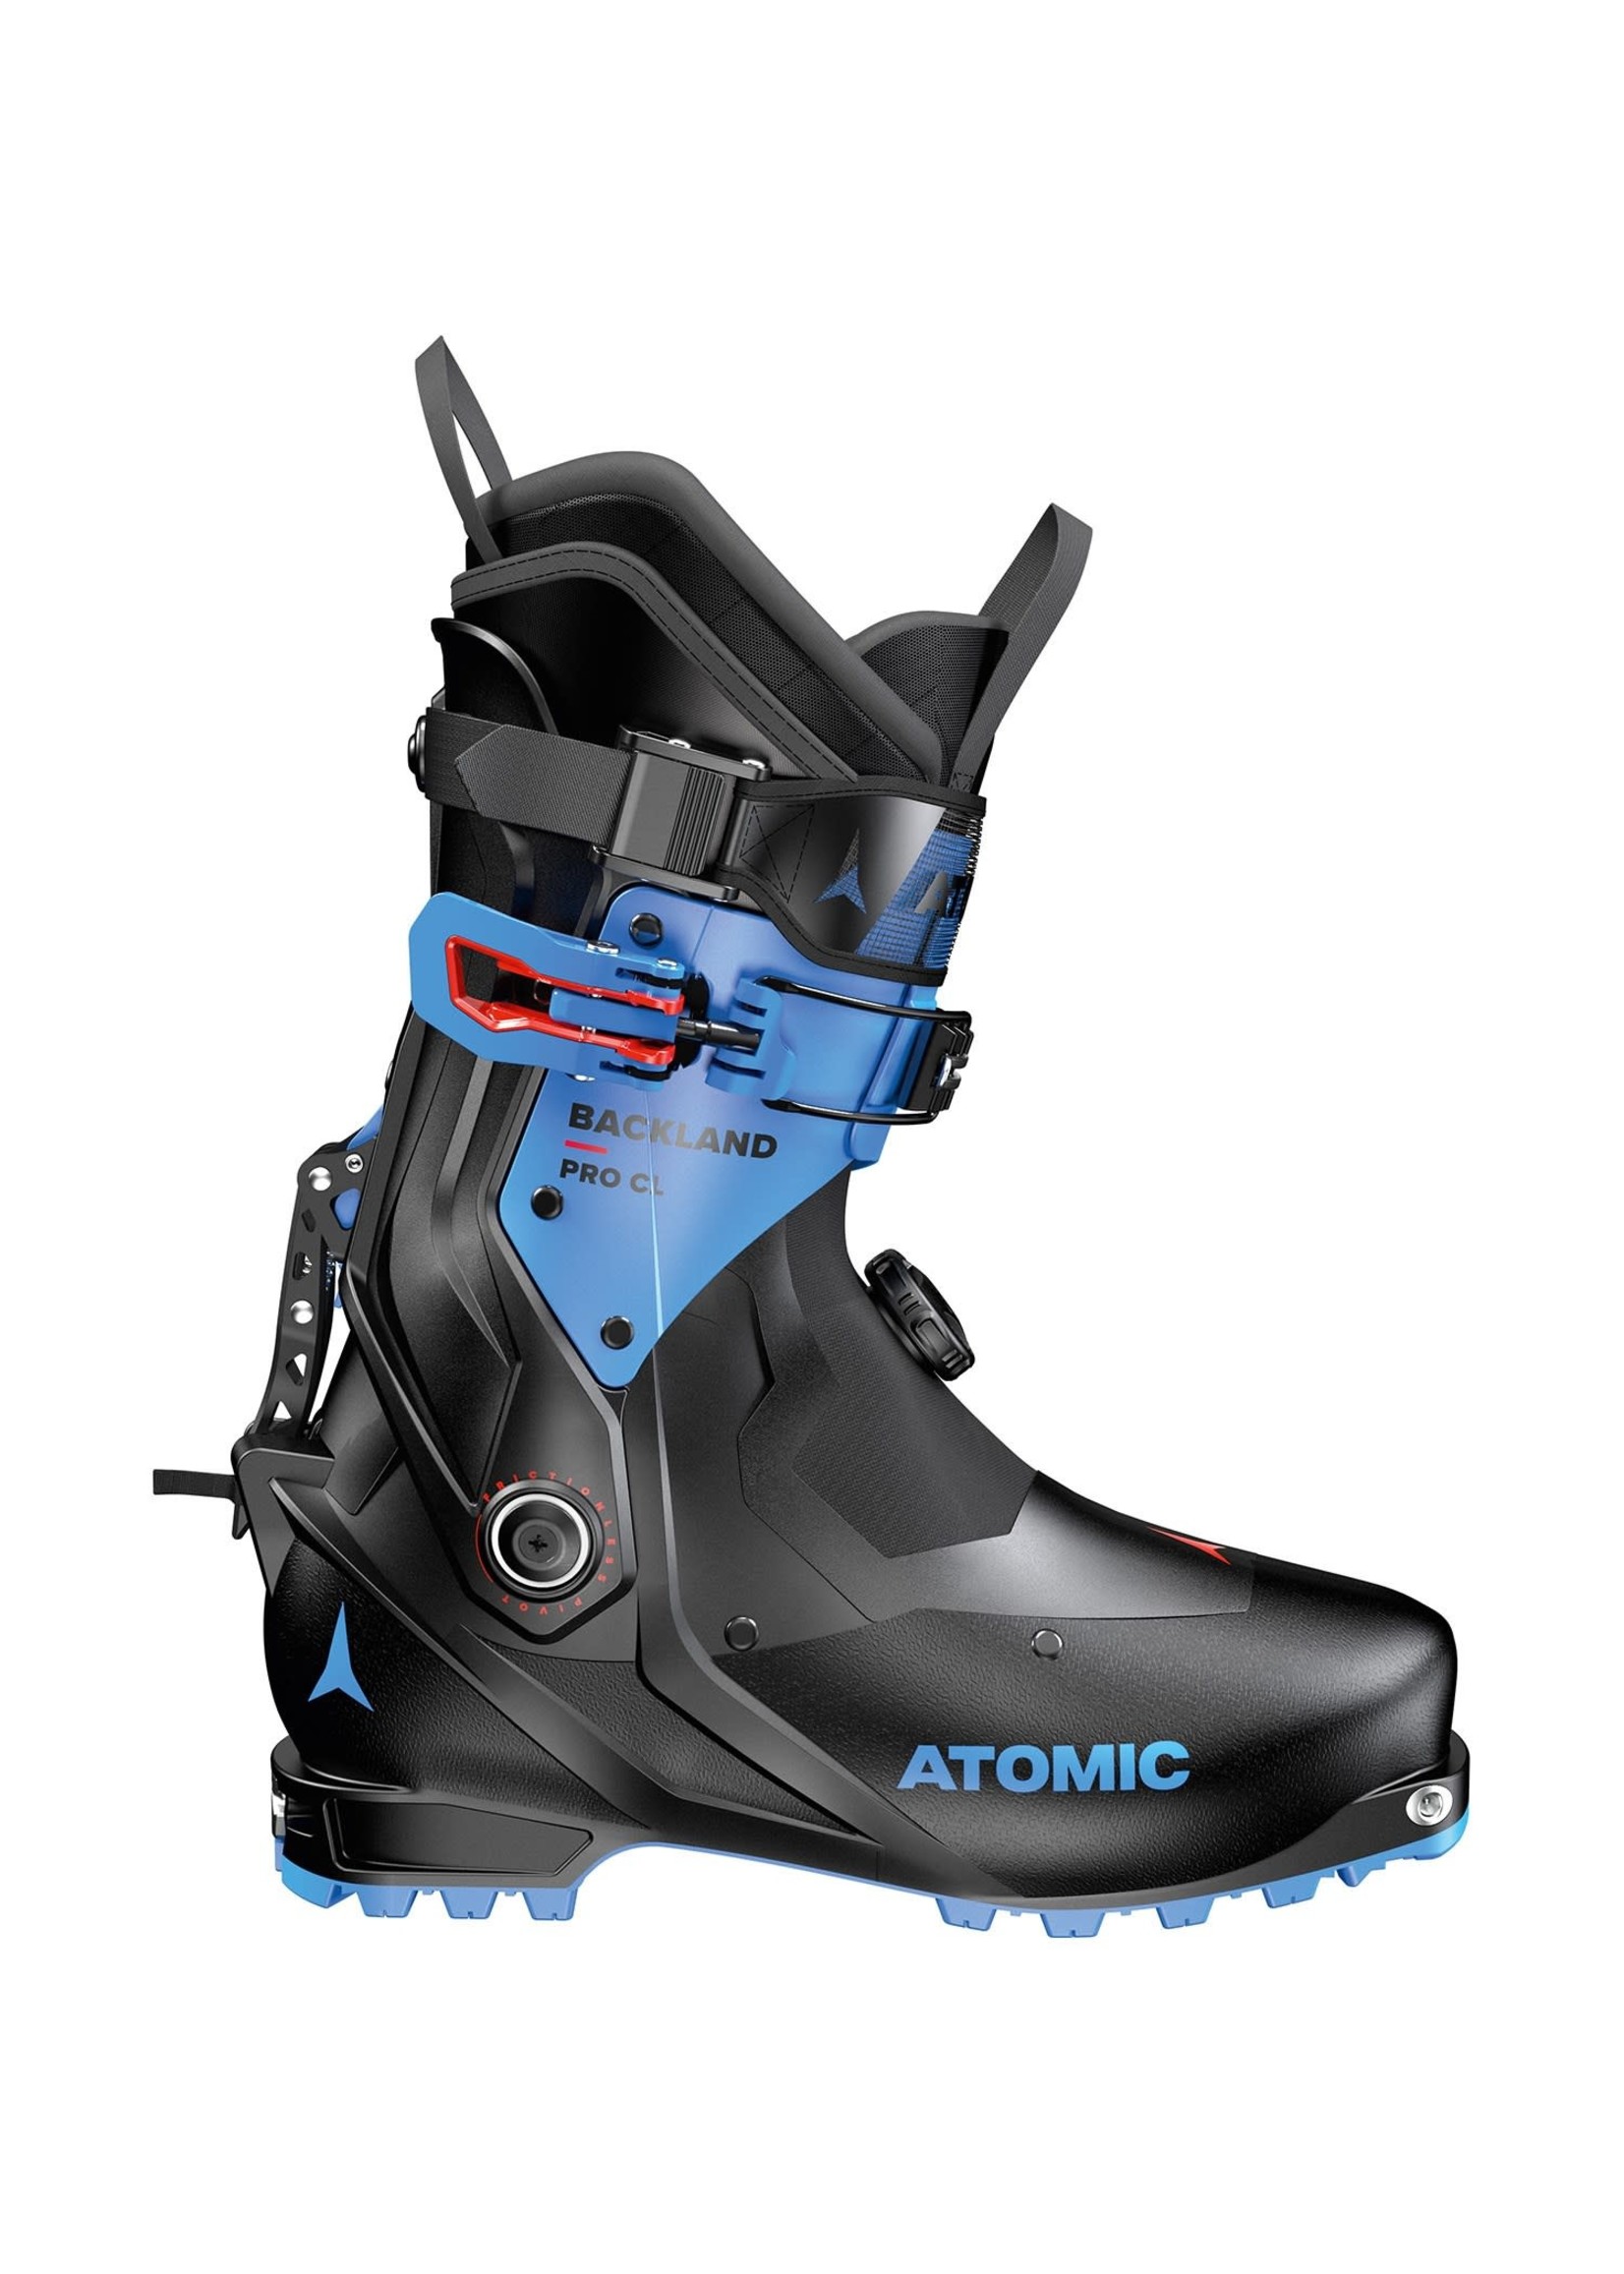 Atomic Atomic Backland Pro CL Boots - Men